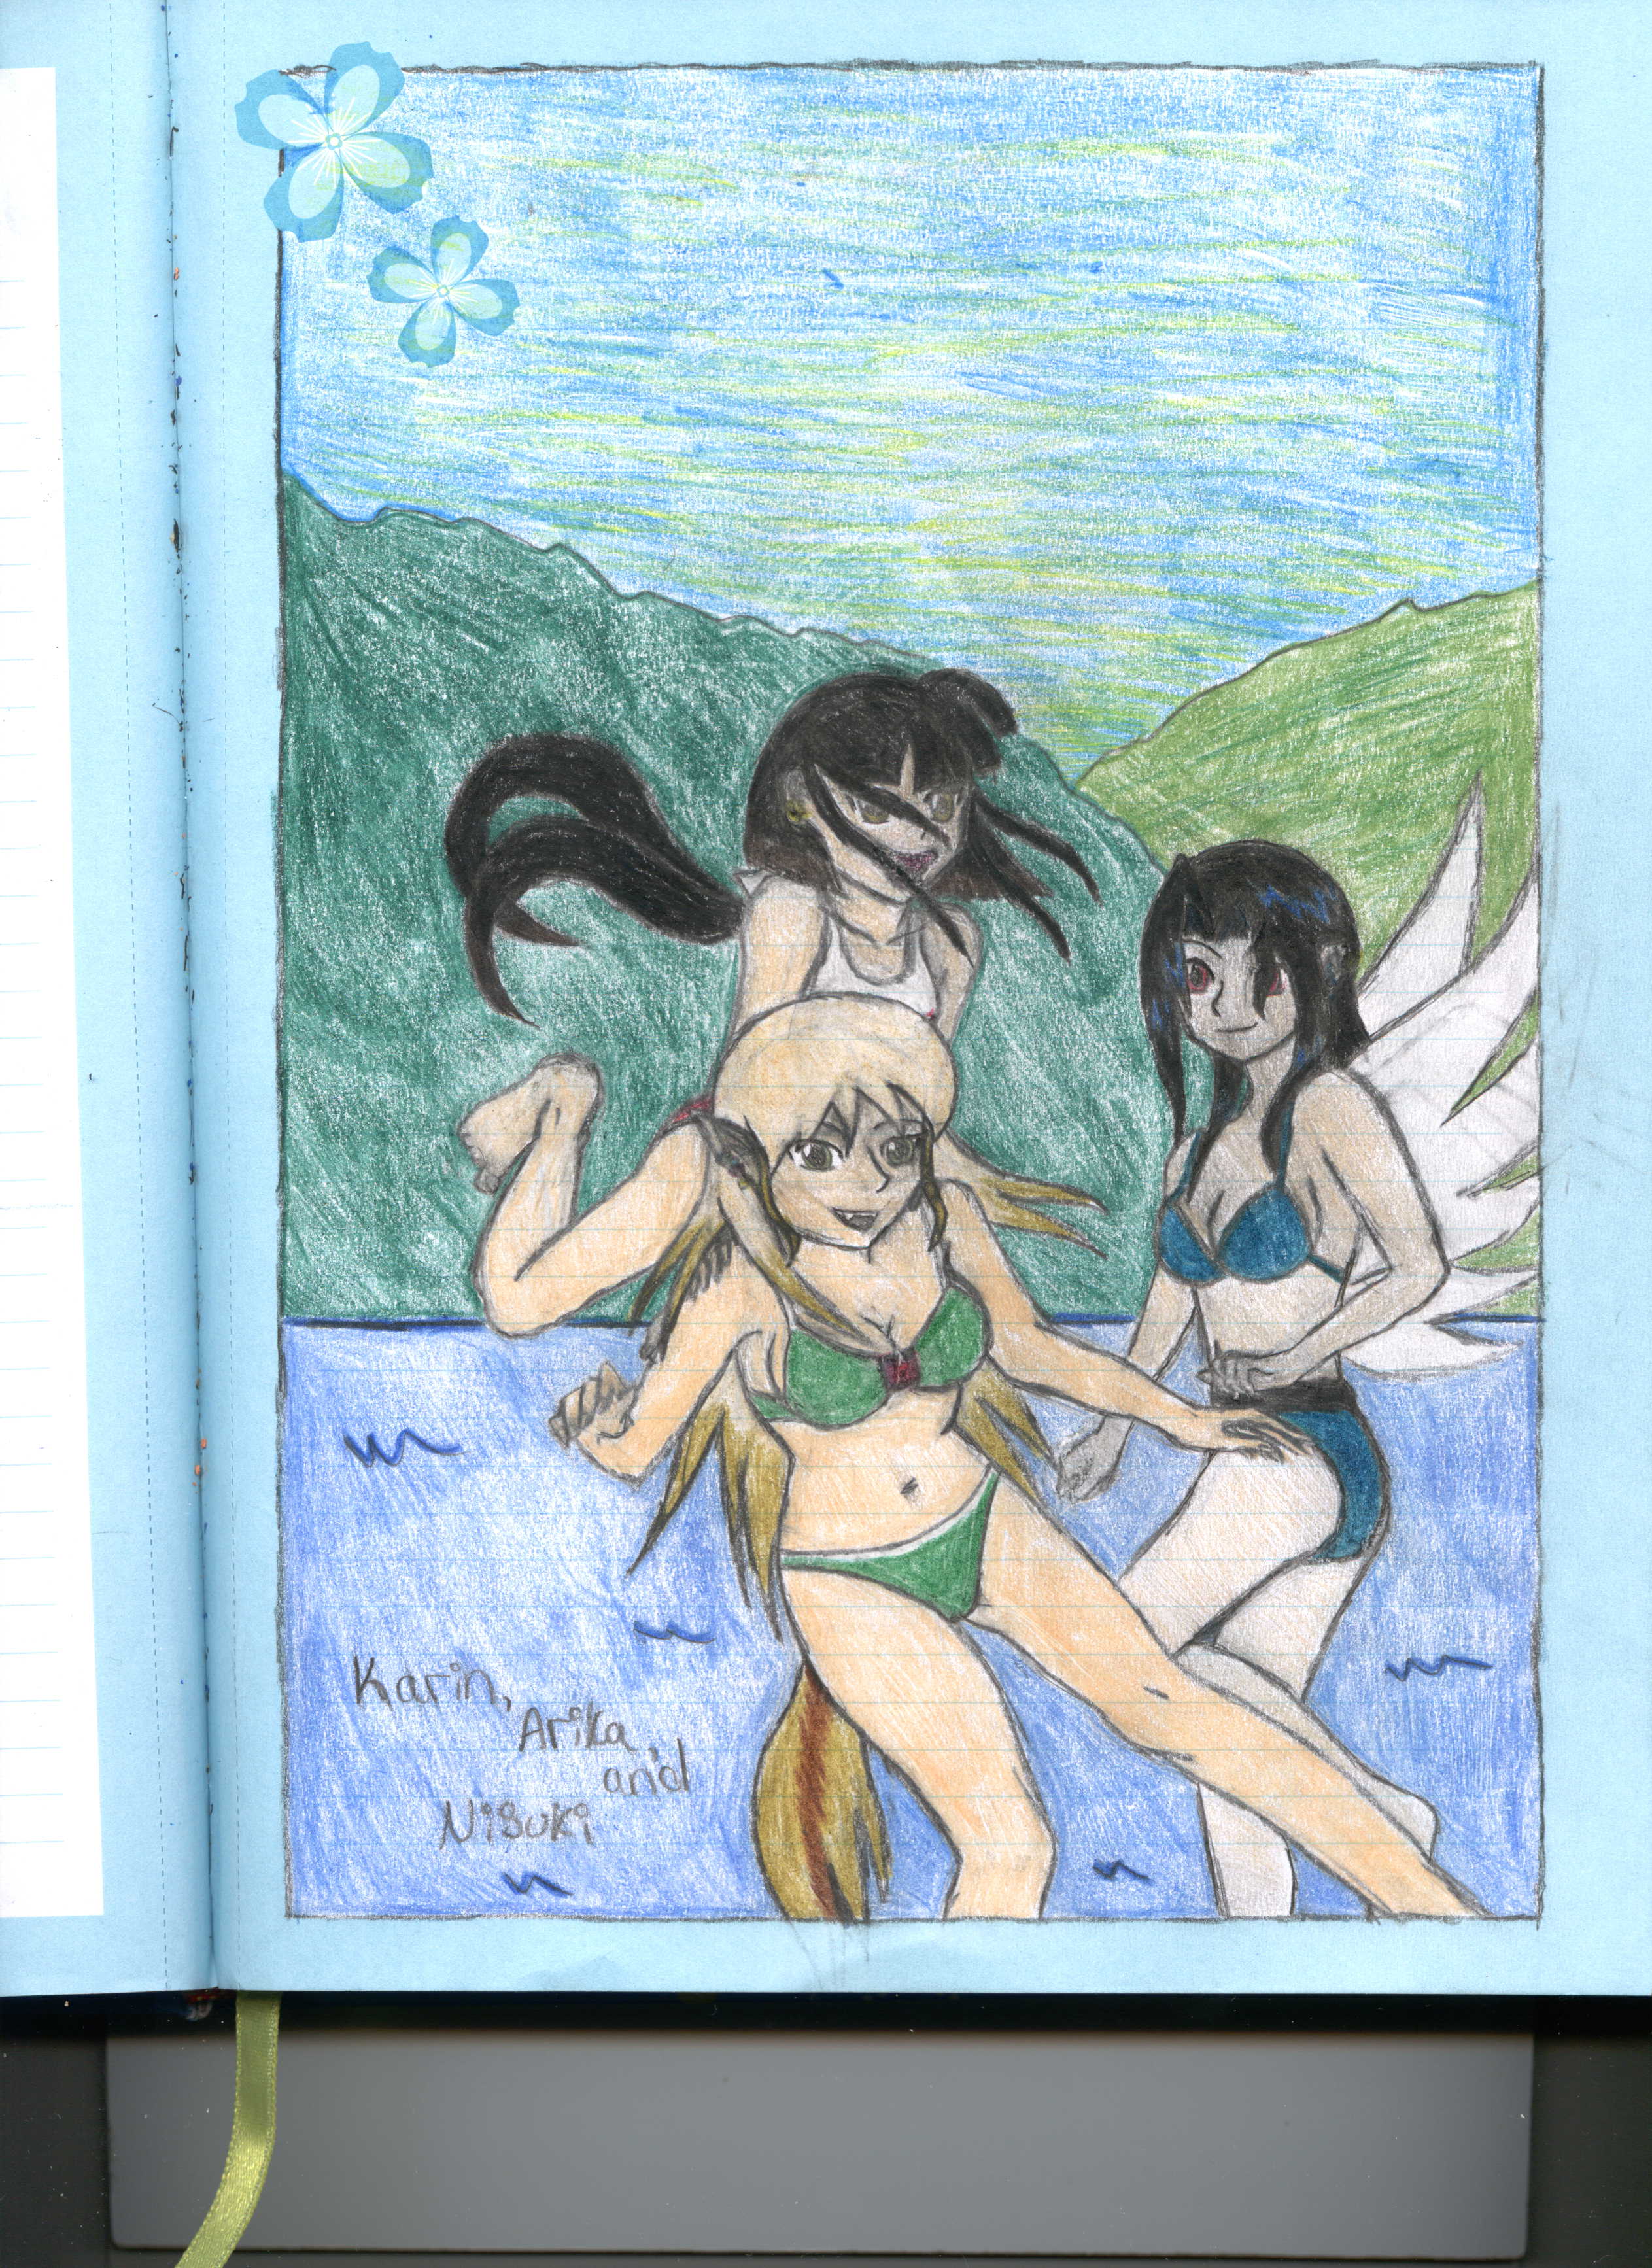 Arika, Karin, and Nisuki by KougaHugger